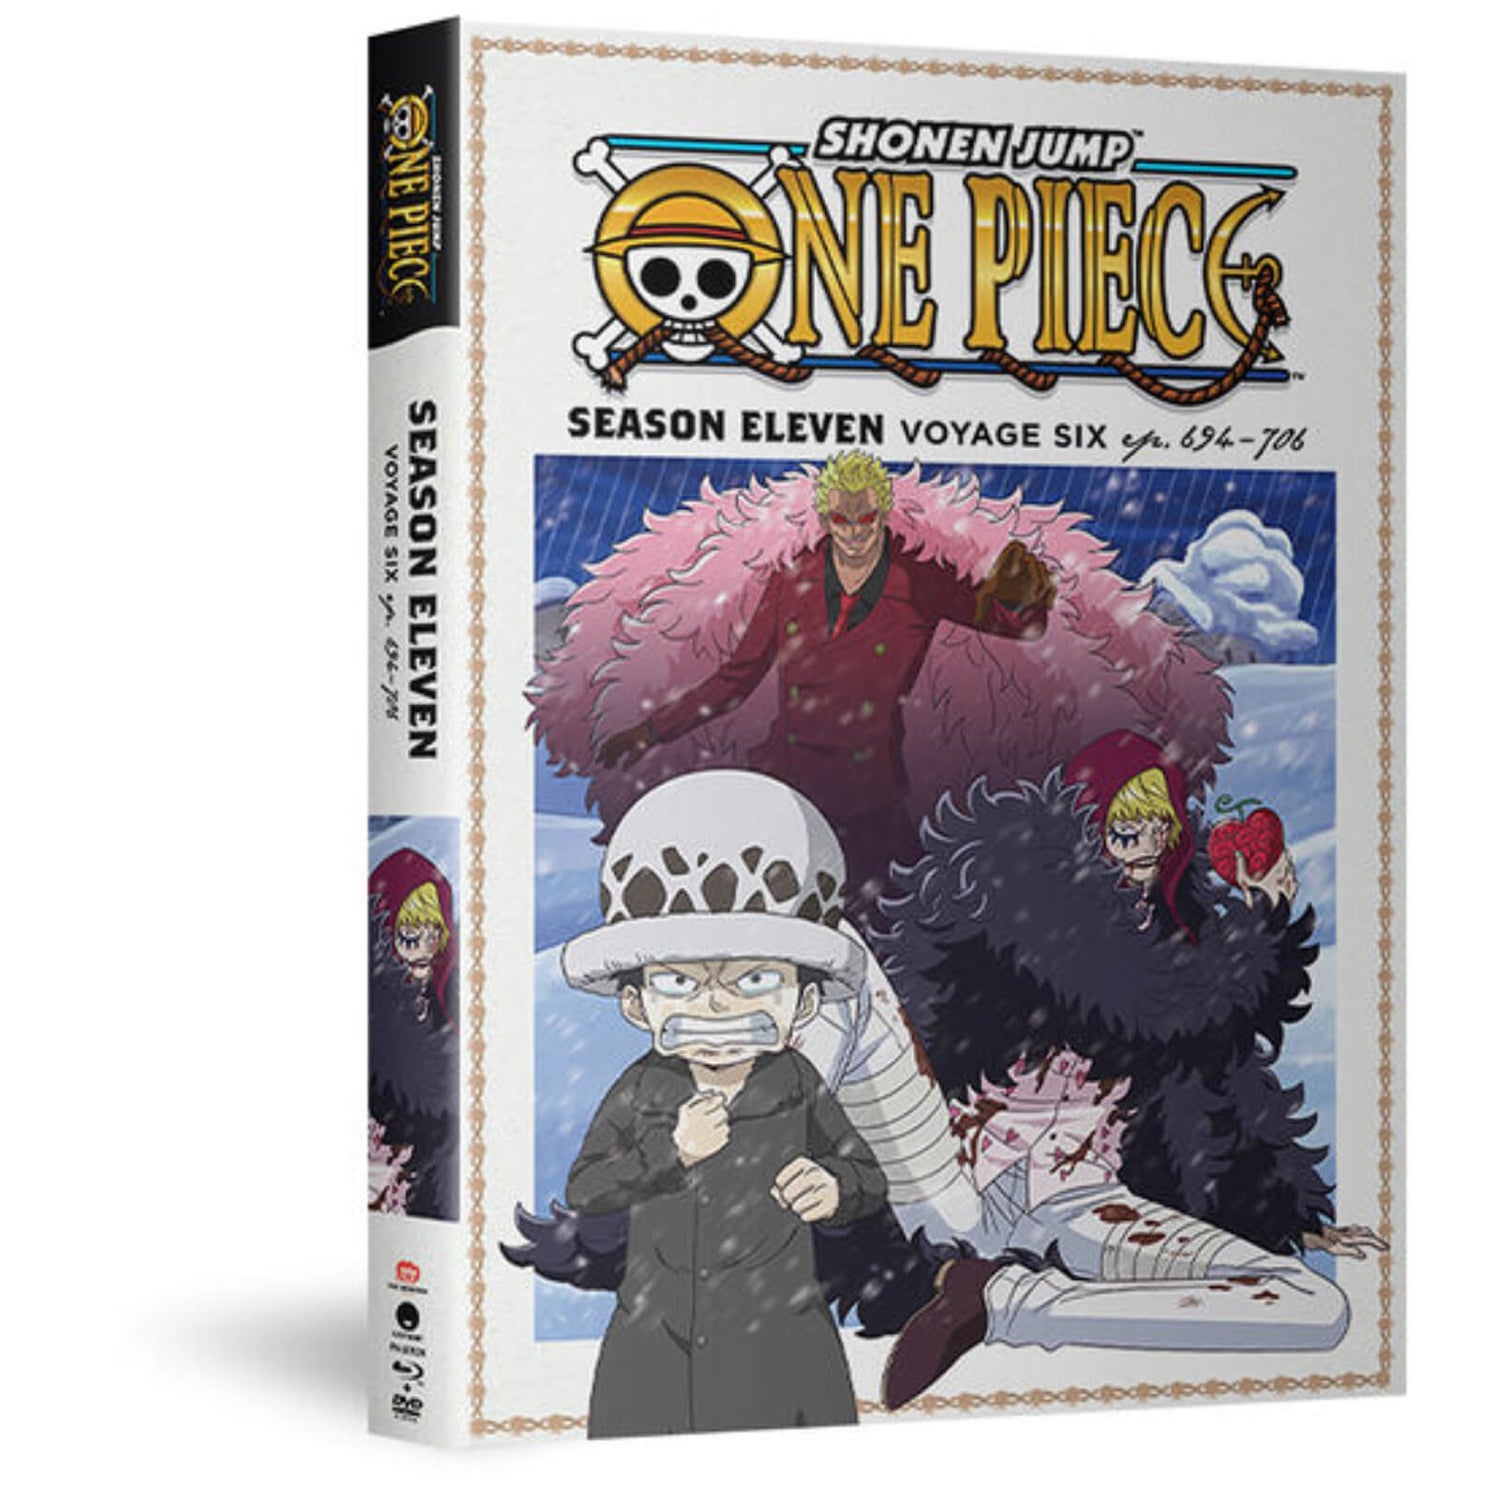 One Piece: Season 11 Voyage 6 (US Import)